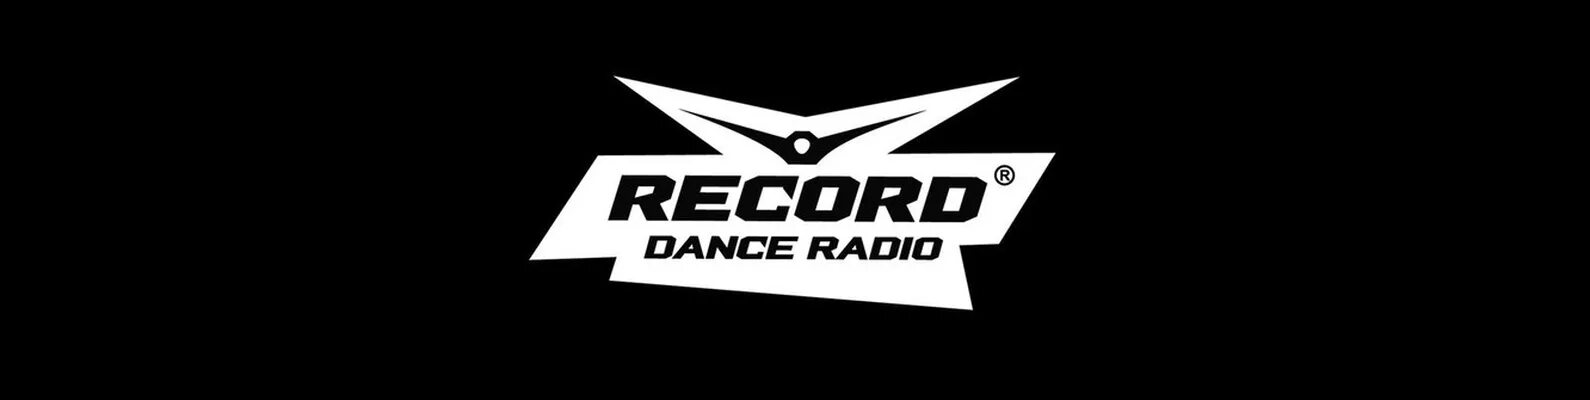 Радио рекорд. Radio record logo. Record Dance Radio. Логотипы радиостанций рекорд. Слушать топ радио рекорд